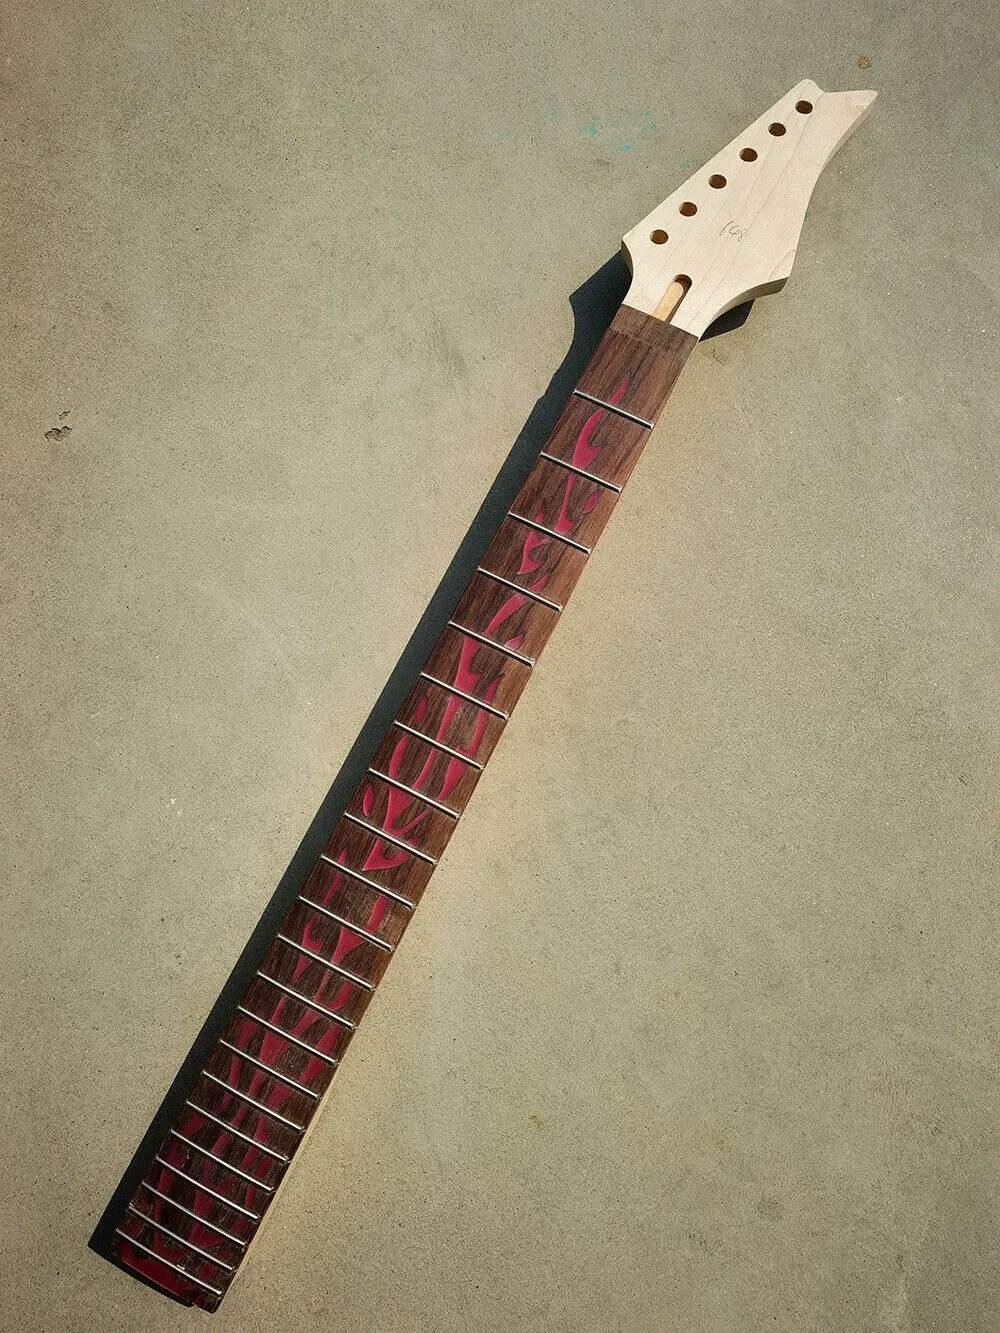 DIY Guitar Neck 22 FRET 25.5 Inch Maple Rosewood Fretboard غير مكتمل على